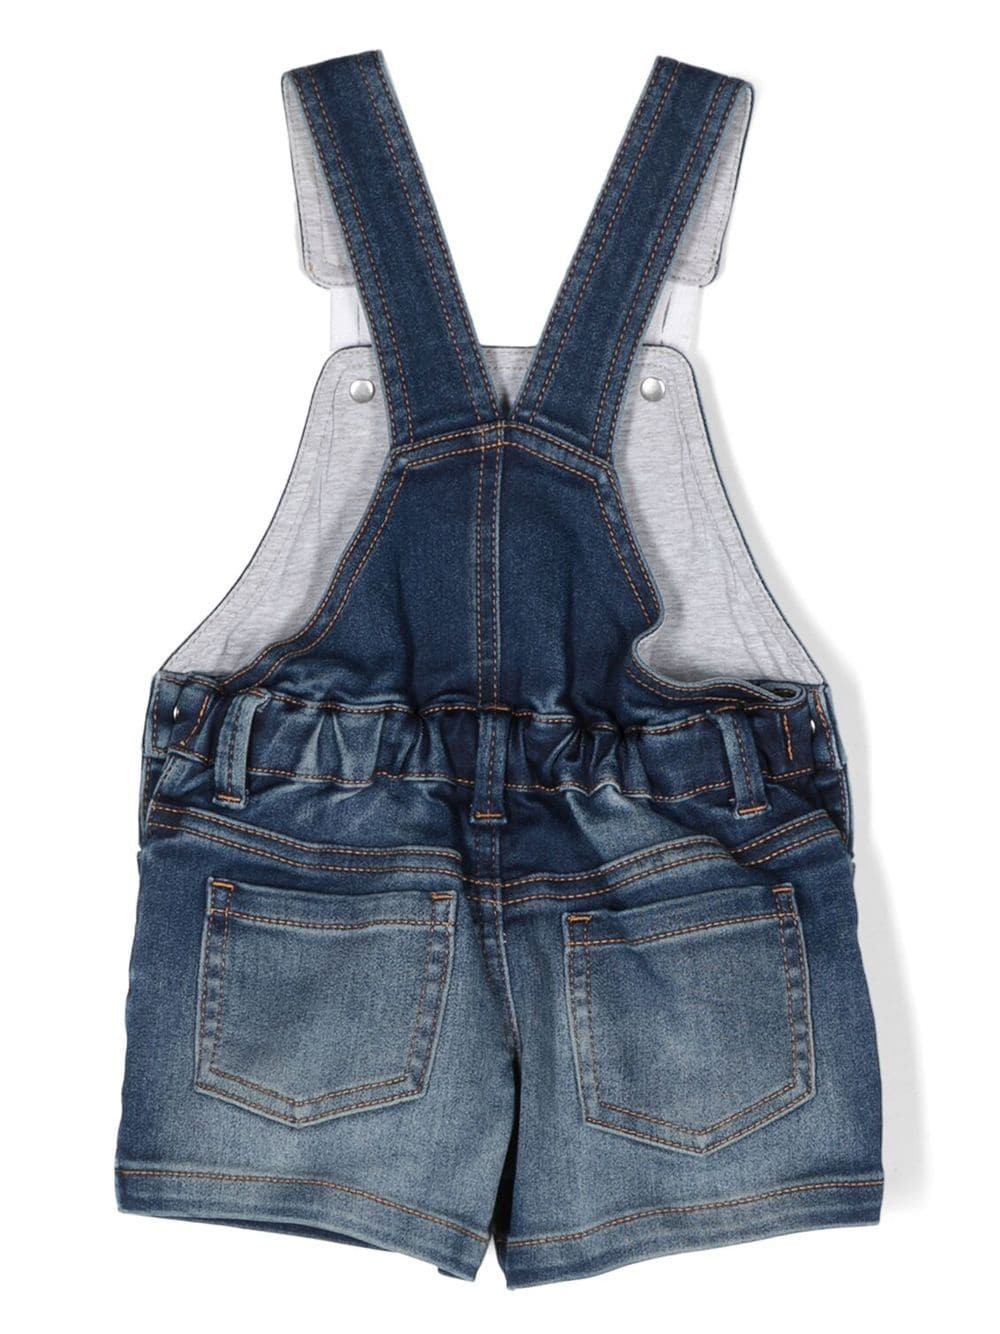 Blue denim overalls for newborns